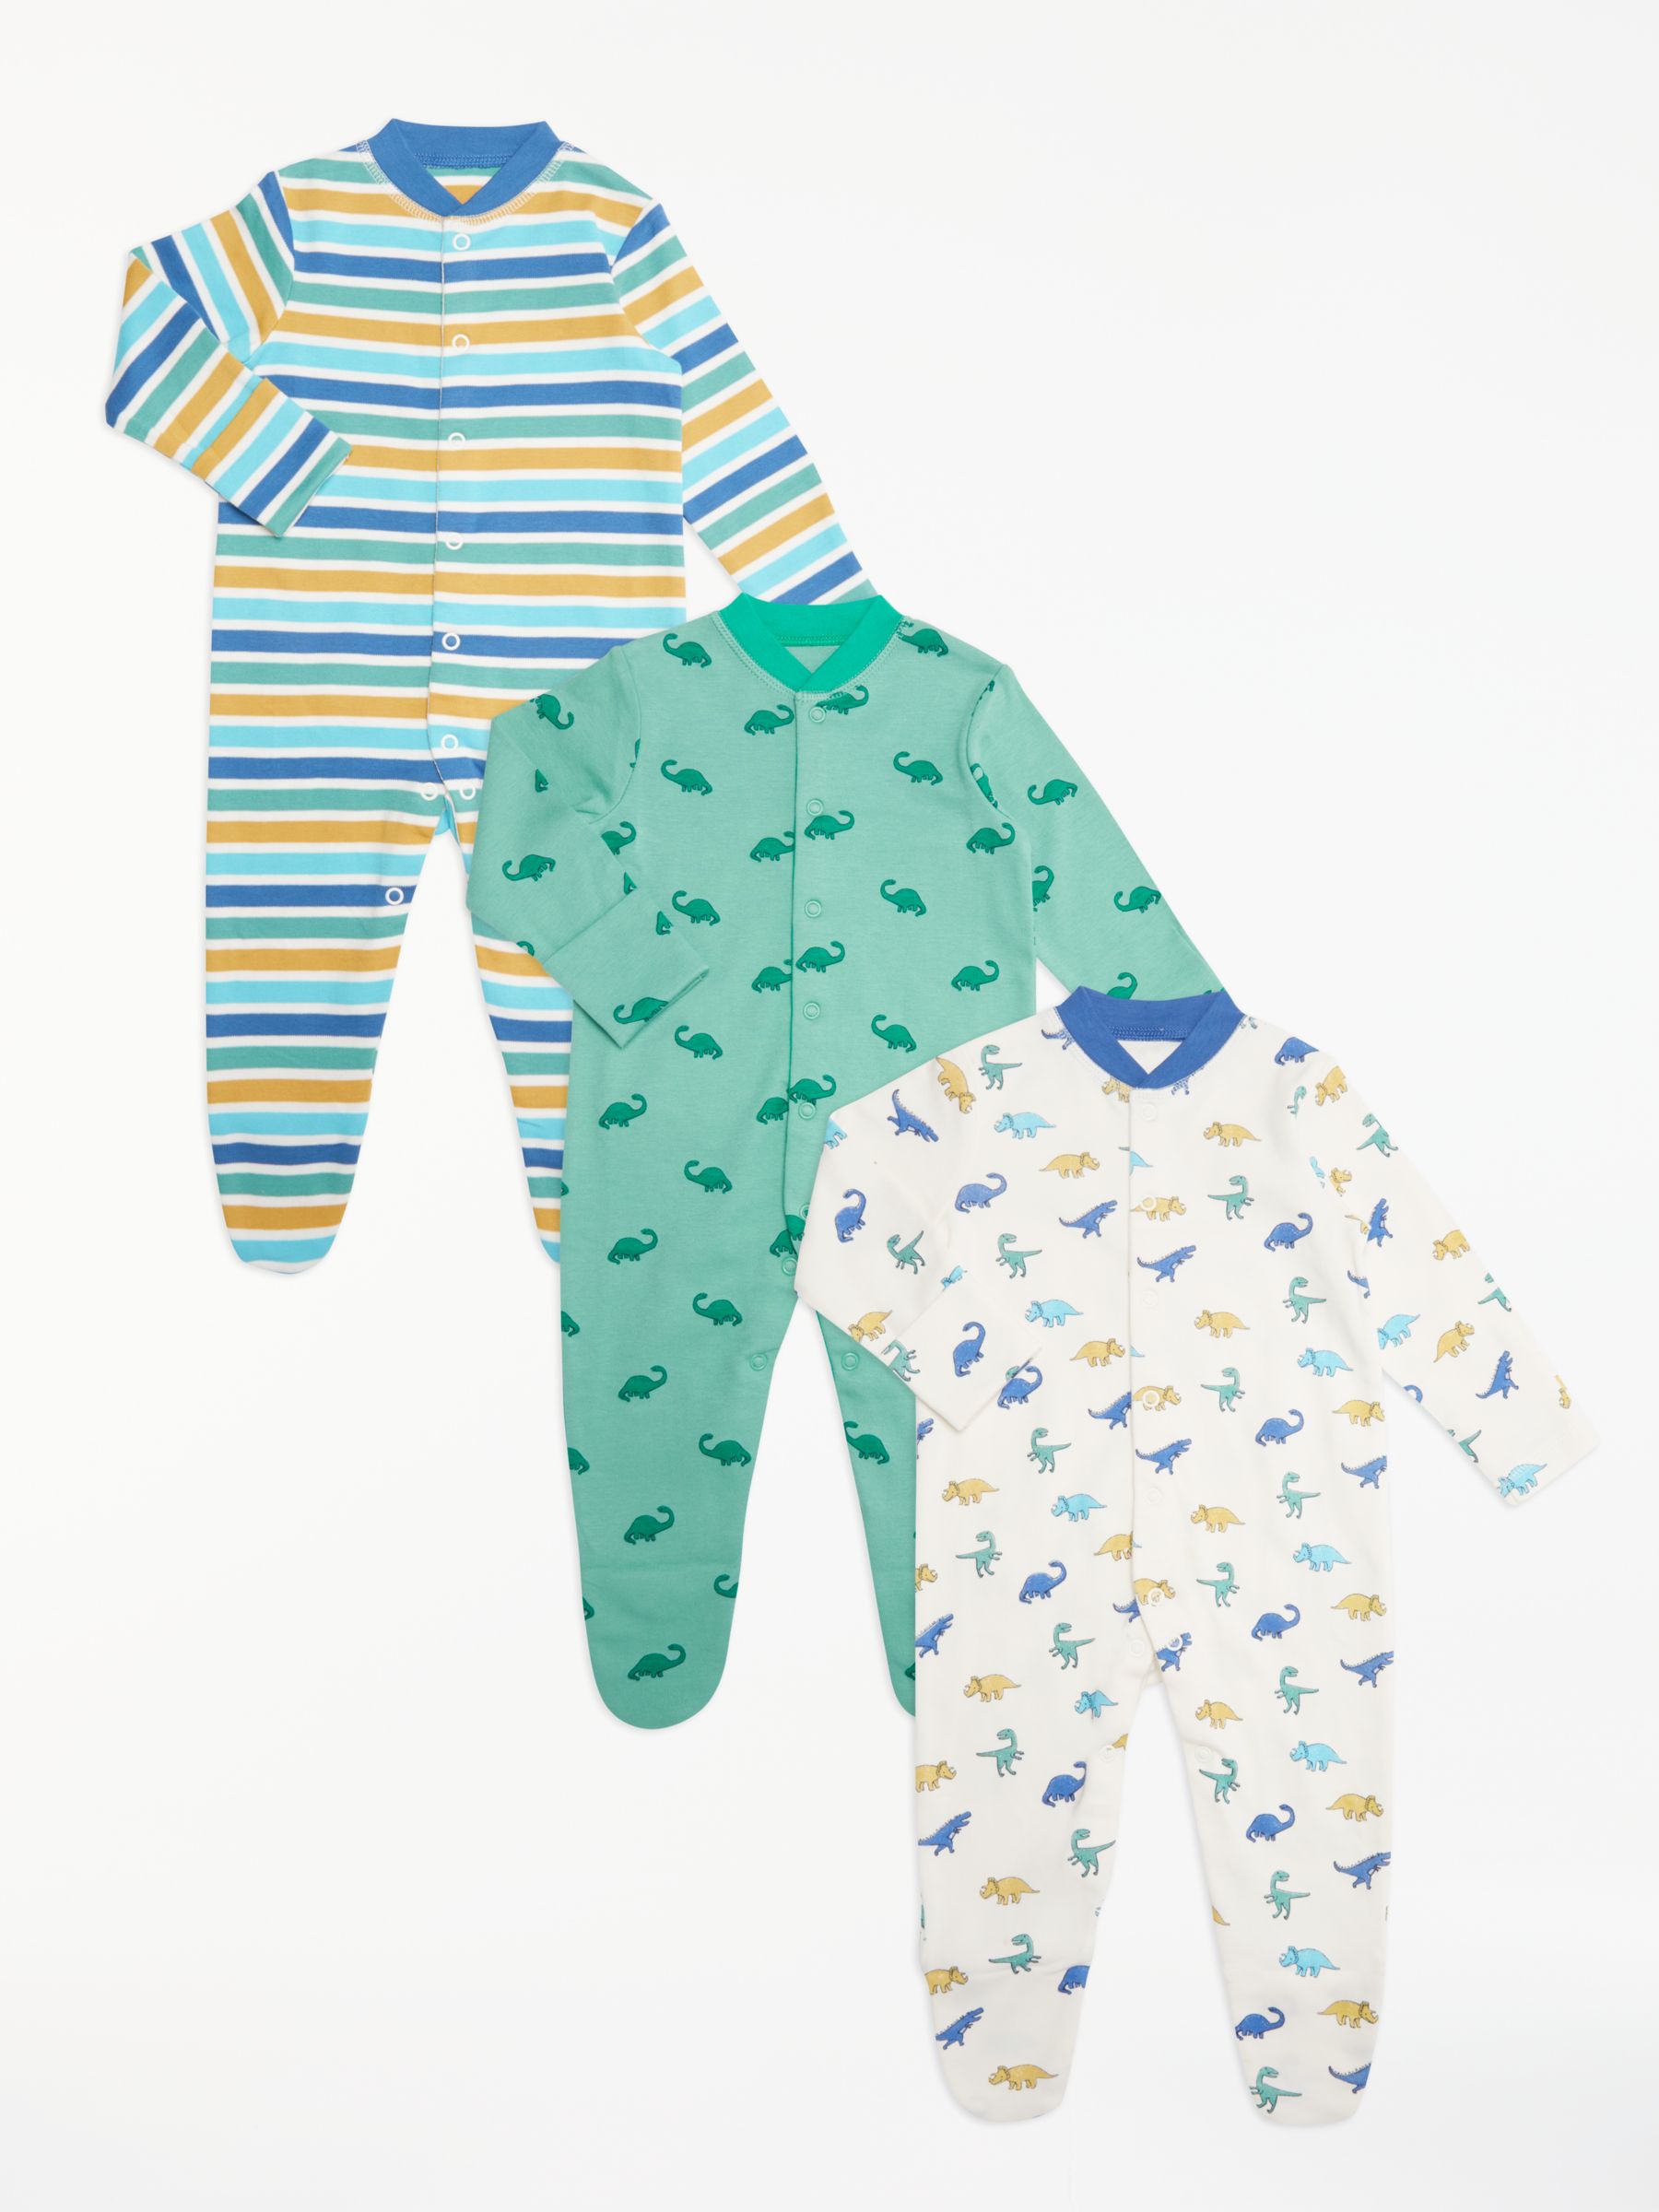 John Lewis & Partners Baby Dinosaur Long Sleeve GOTS Organic Cotton Sleepsuit, Pack of 3, Multi, 18-24 months